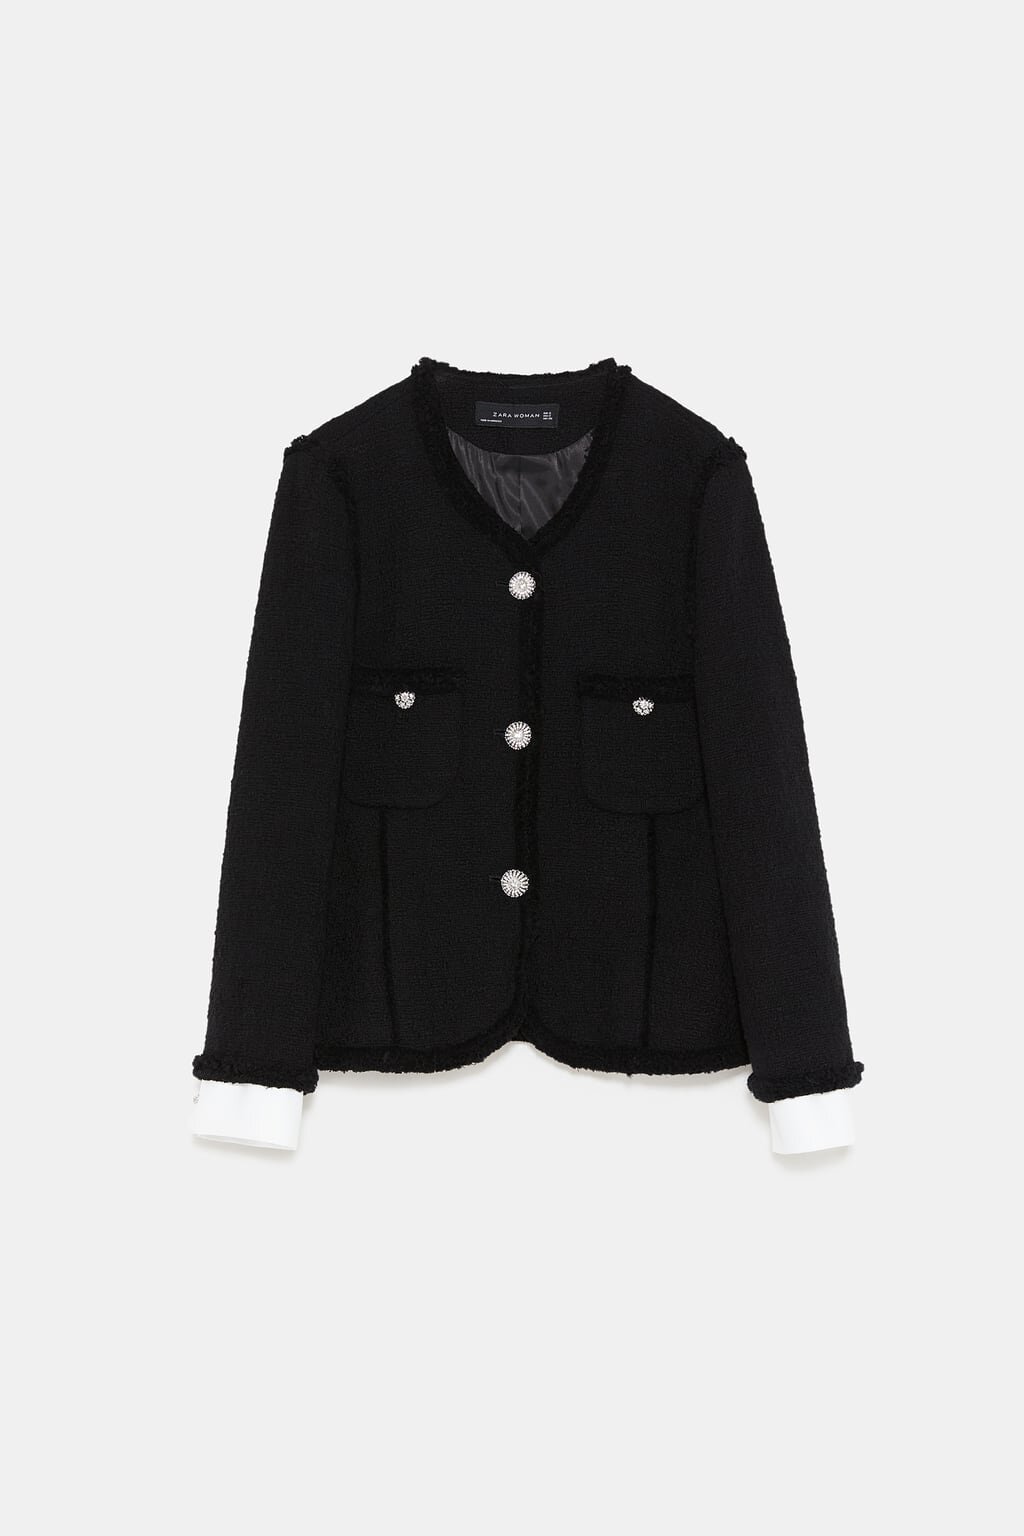 Zara Tweed Blazer with Contrast Cuff in Black.jpg